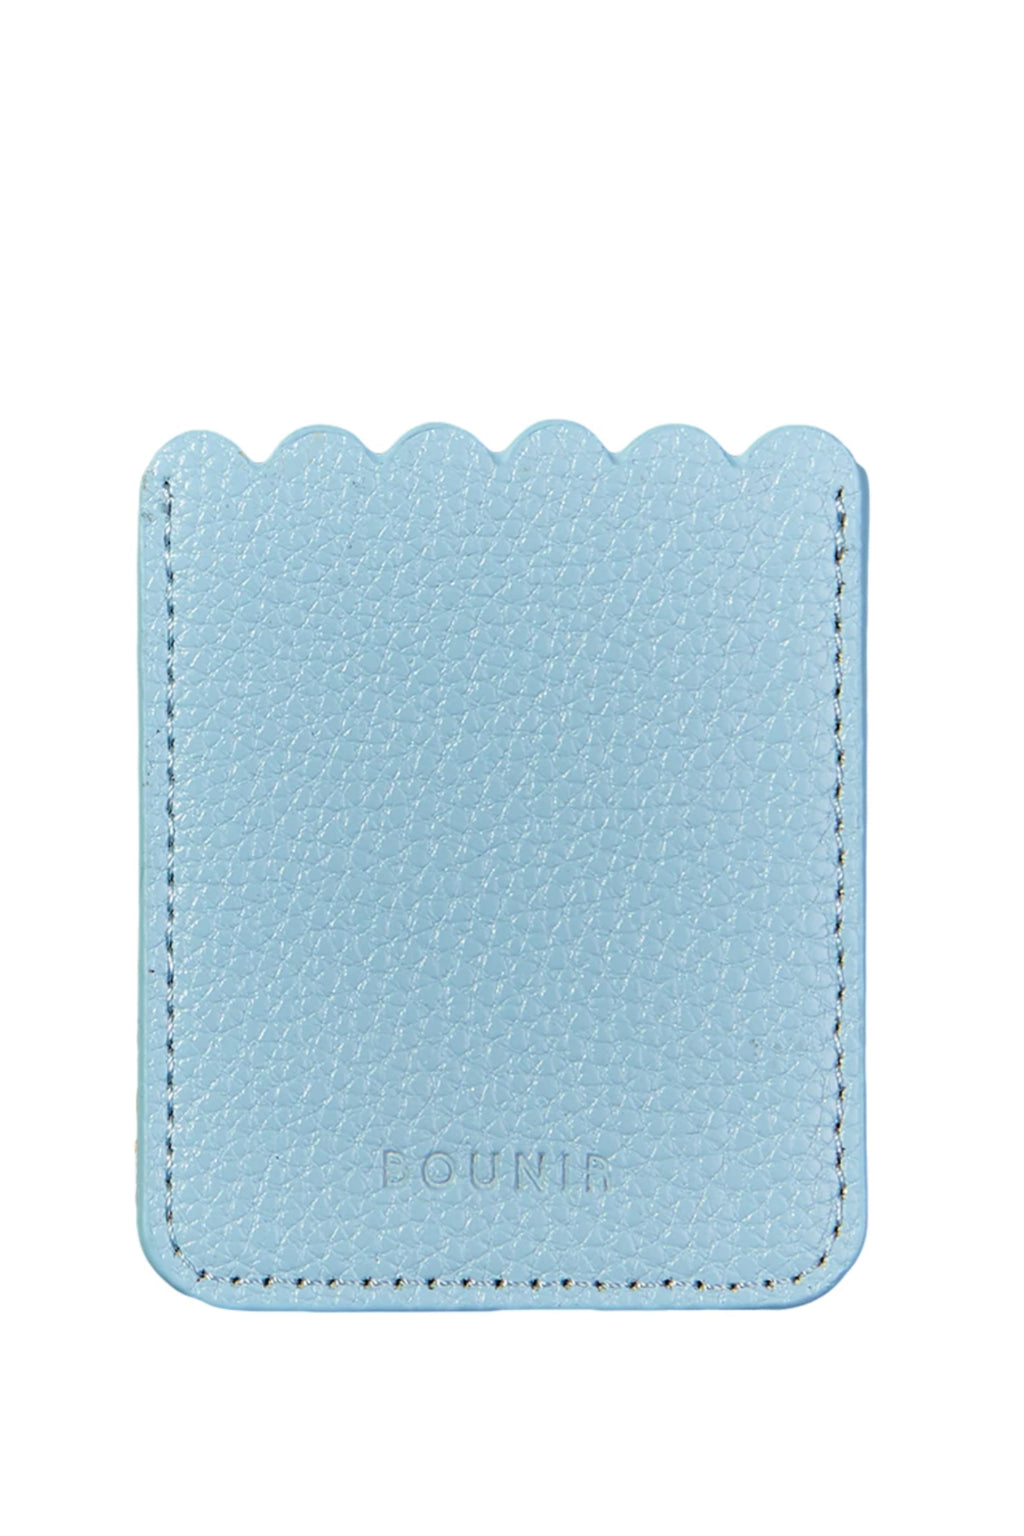 SCALLOP - light blue vegan leather pocket